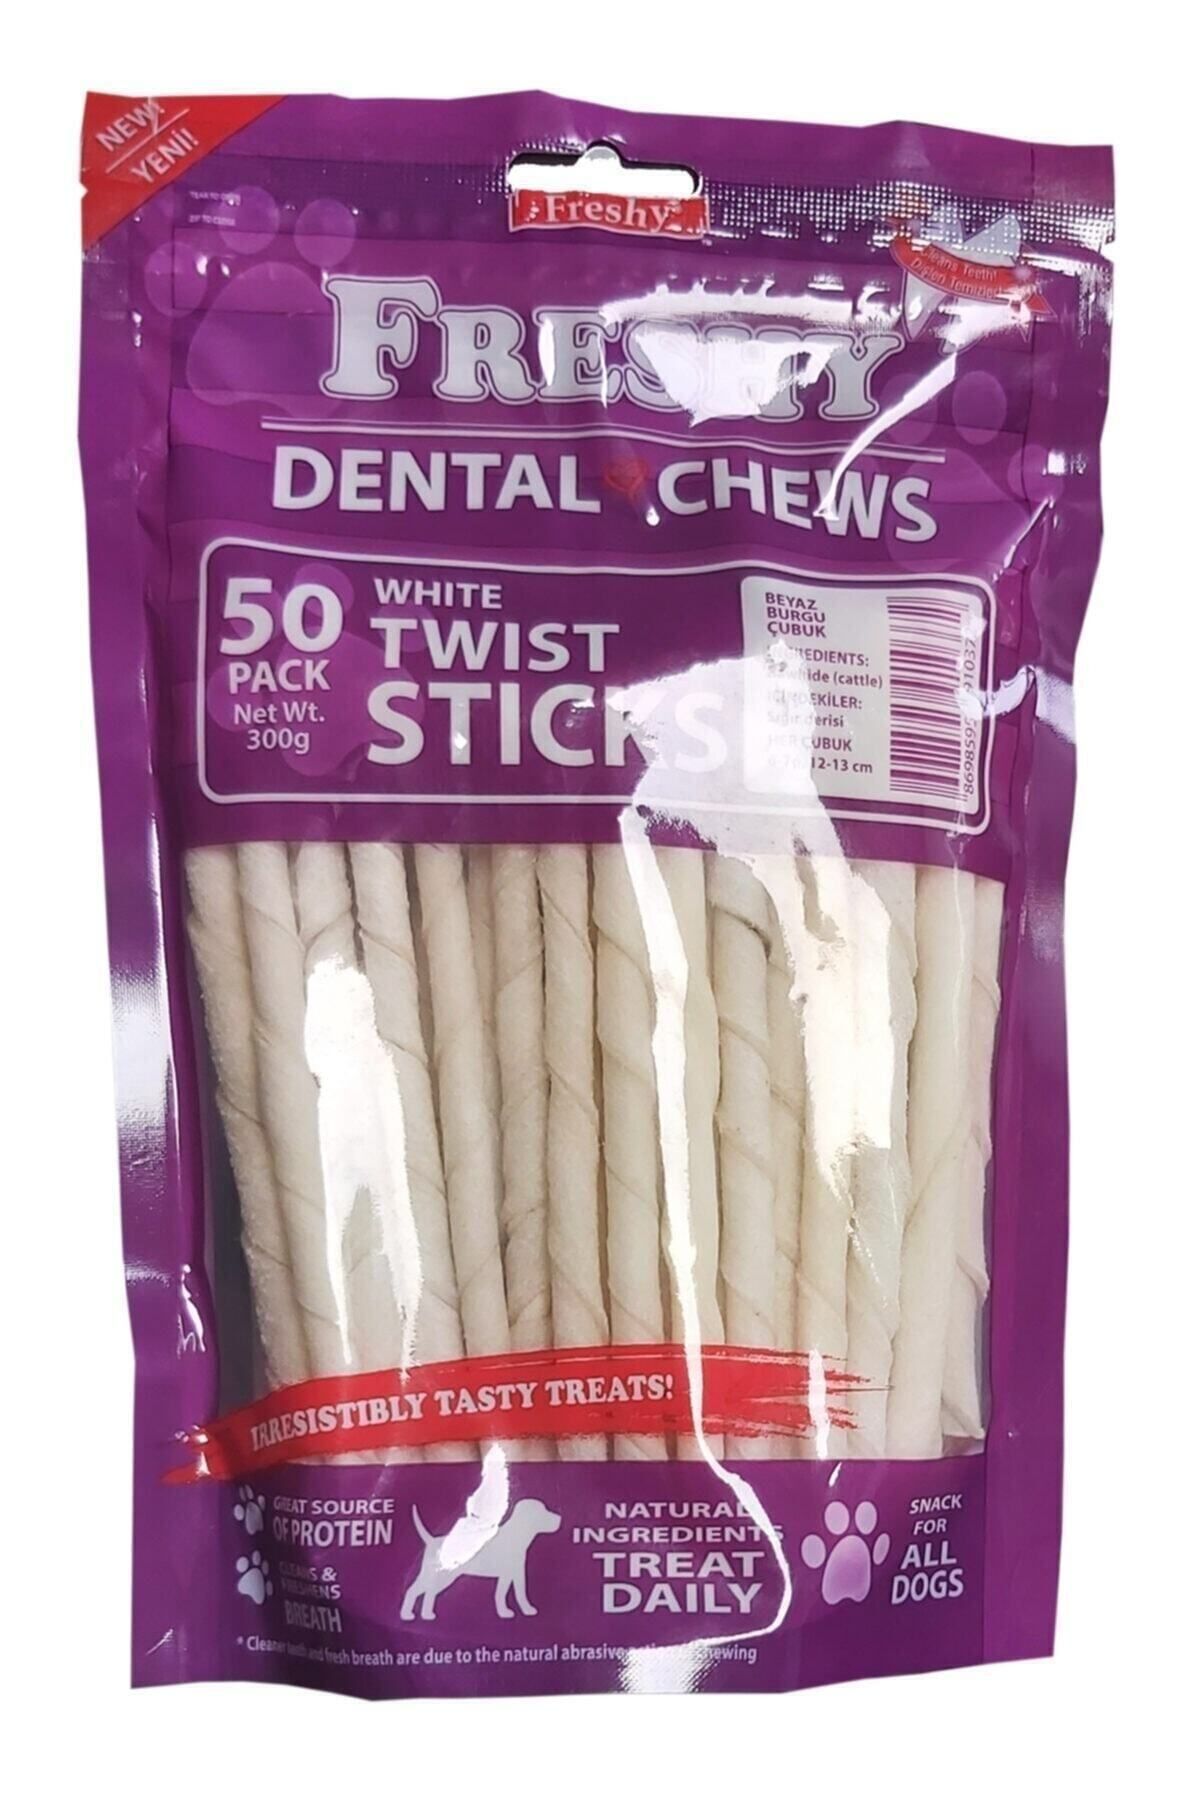 Freshy Dental Twists - Beyaz Burgu Çubuk - 50'li Maxi Paket - 300 gram